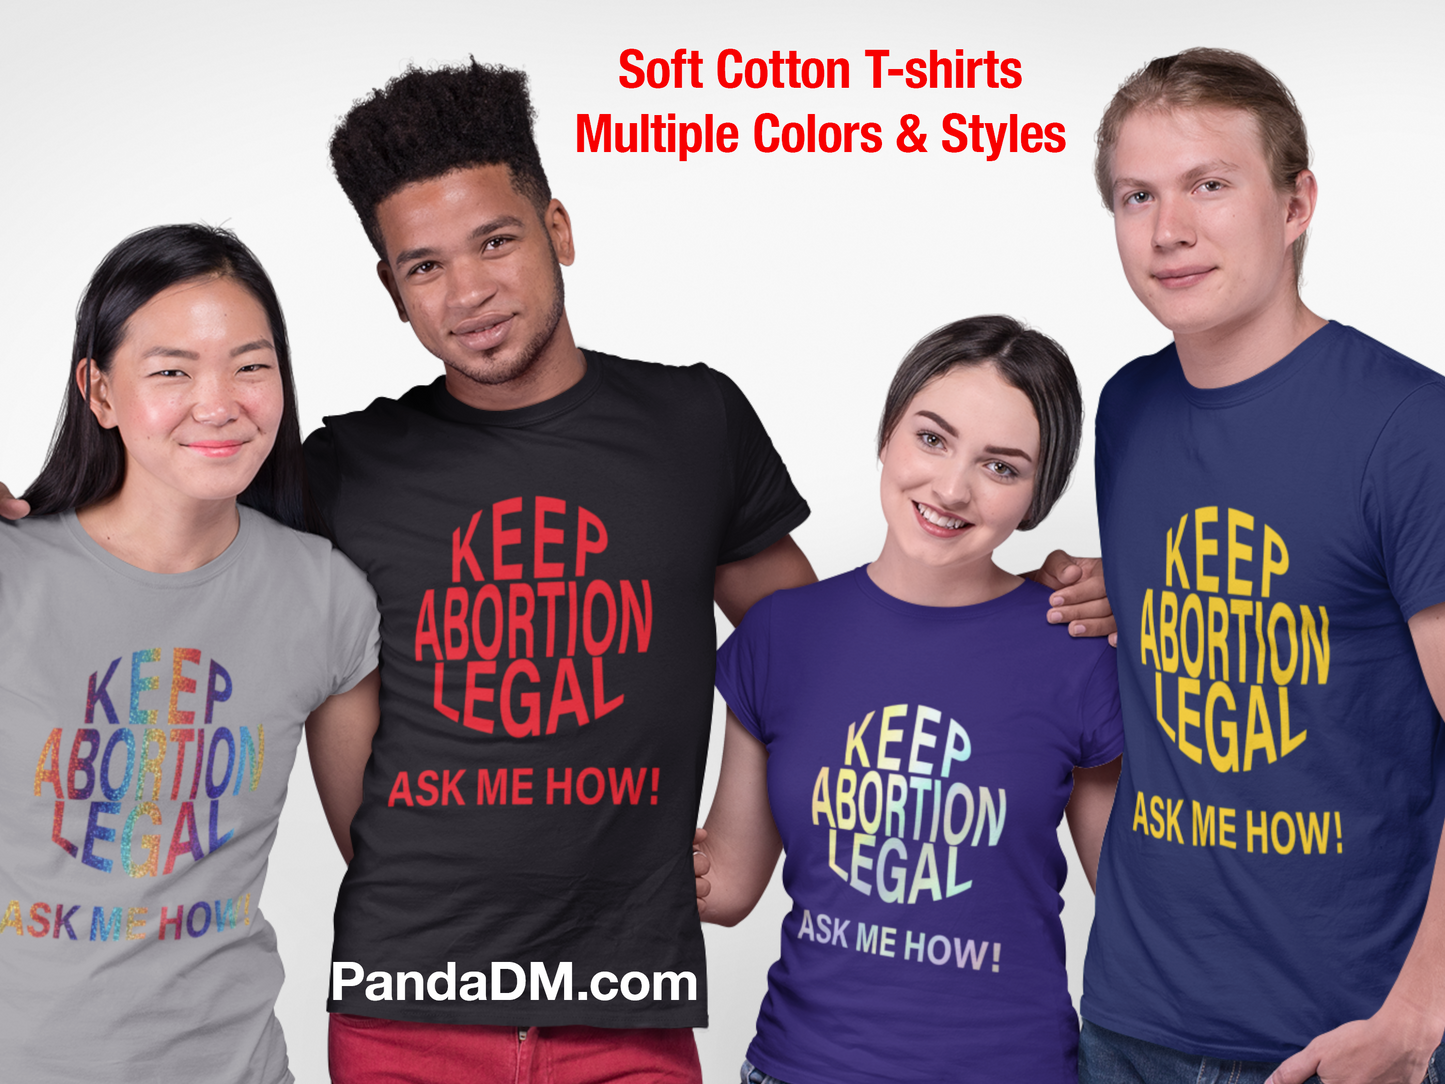 Keep Abortion Legal T-shirt